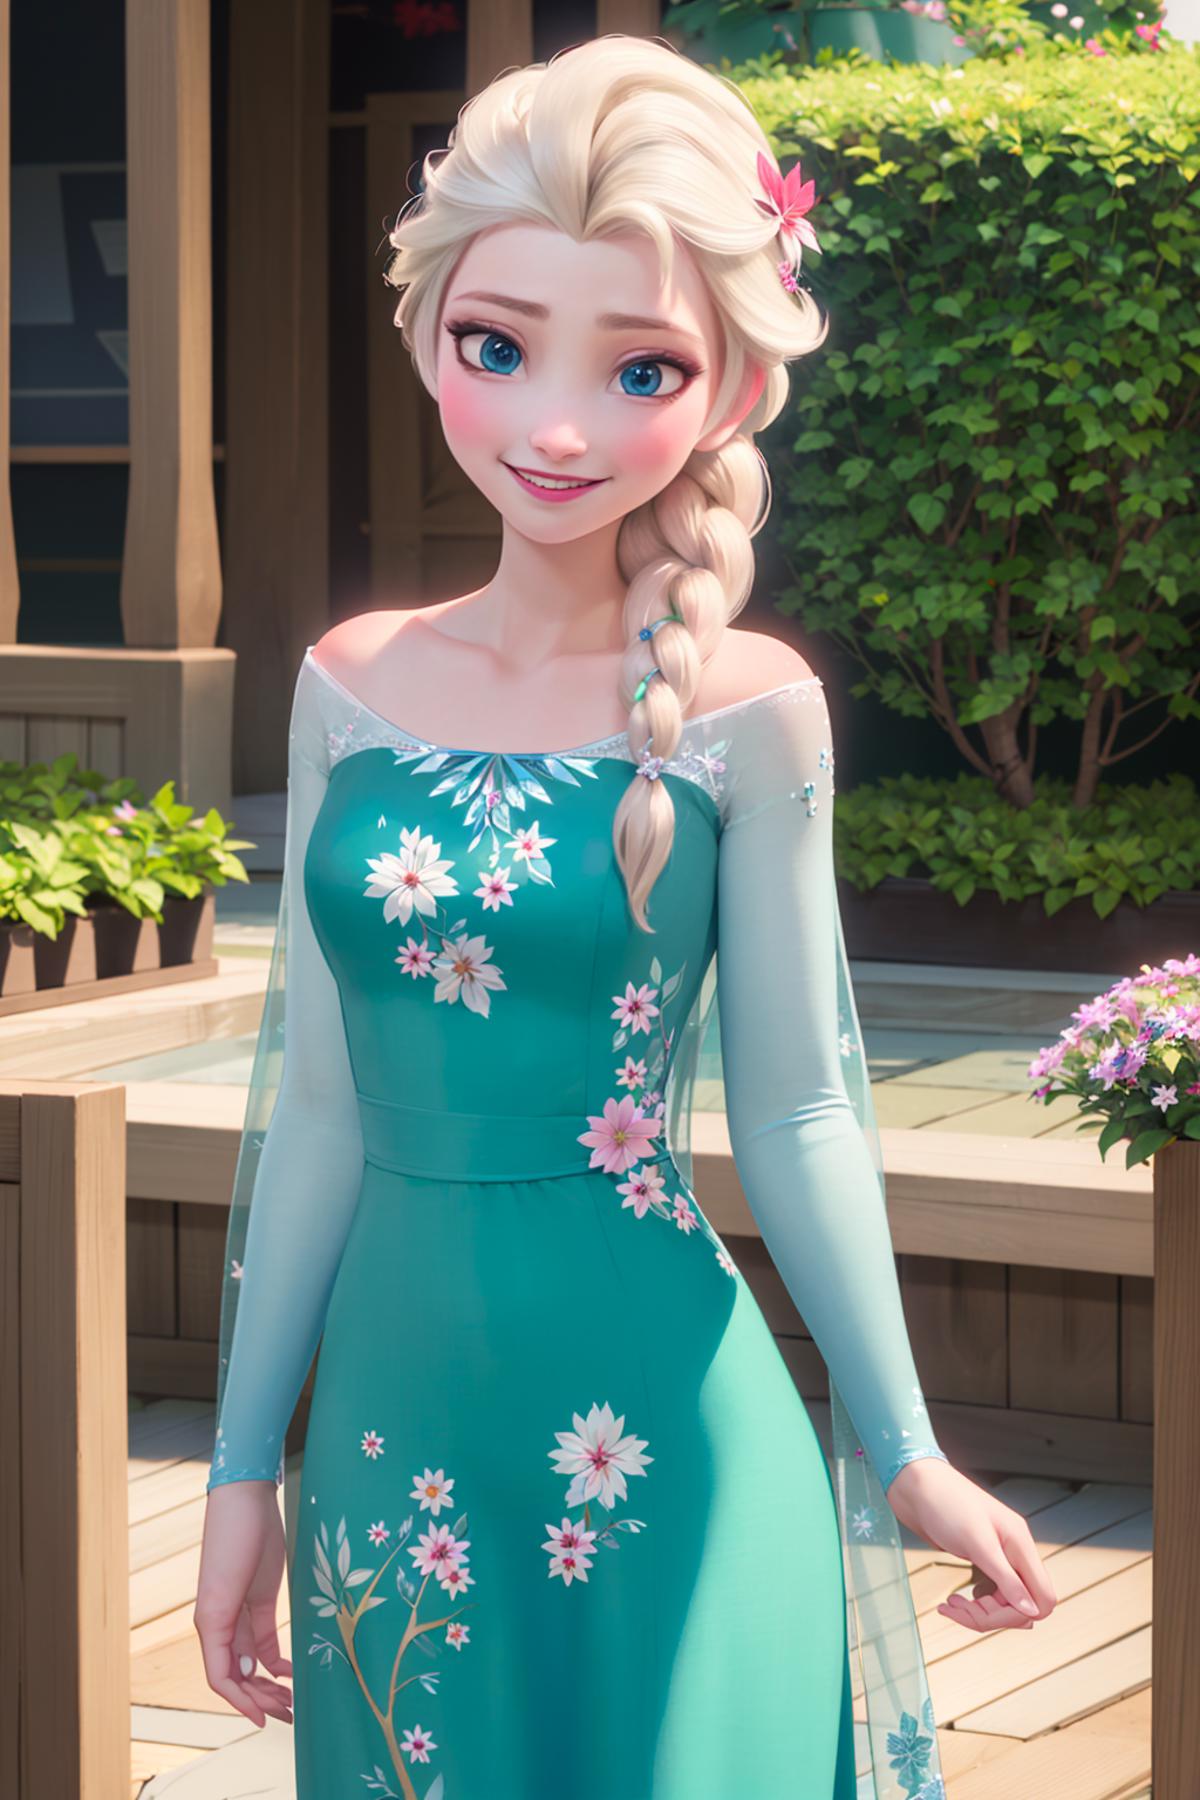 Frozen - Elsa image by chrgg